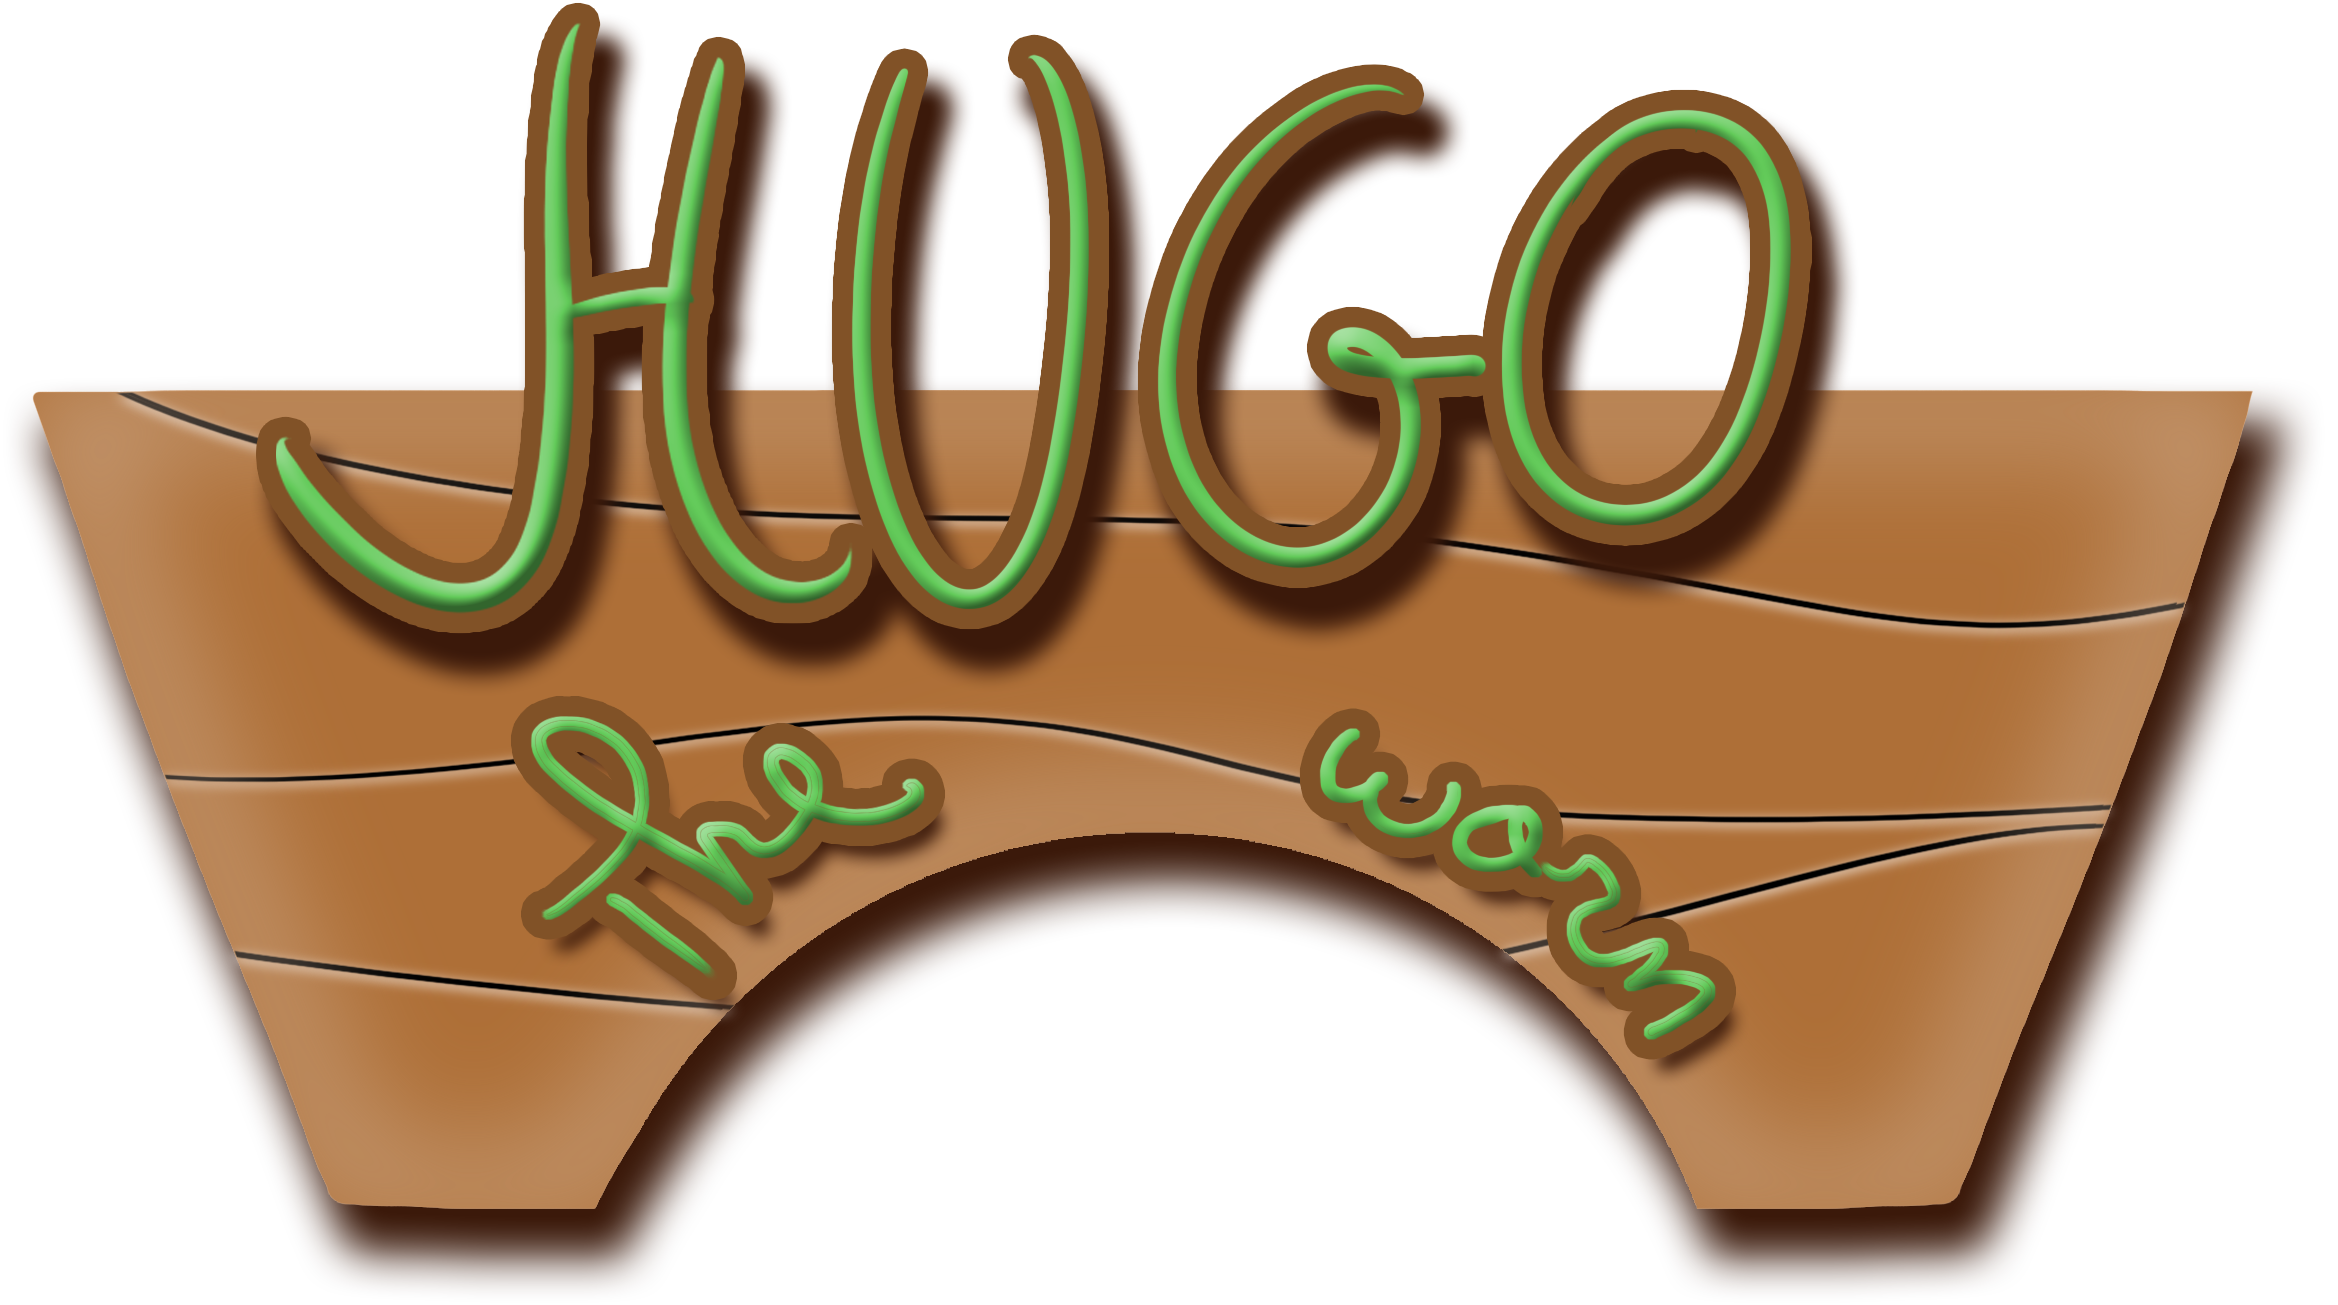 Hugo the Worm